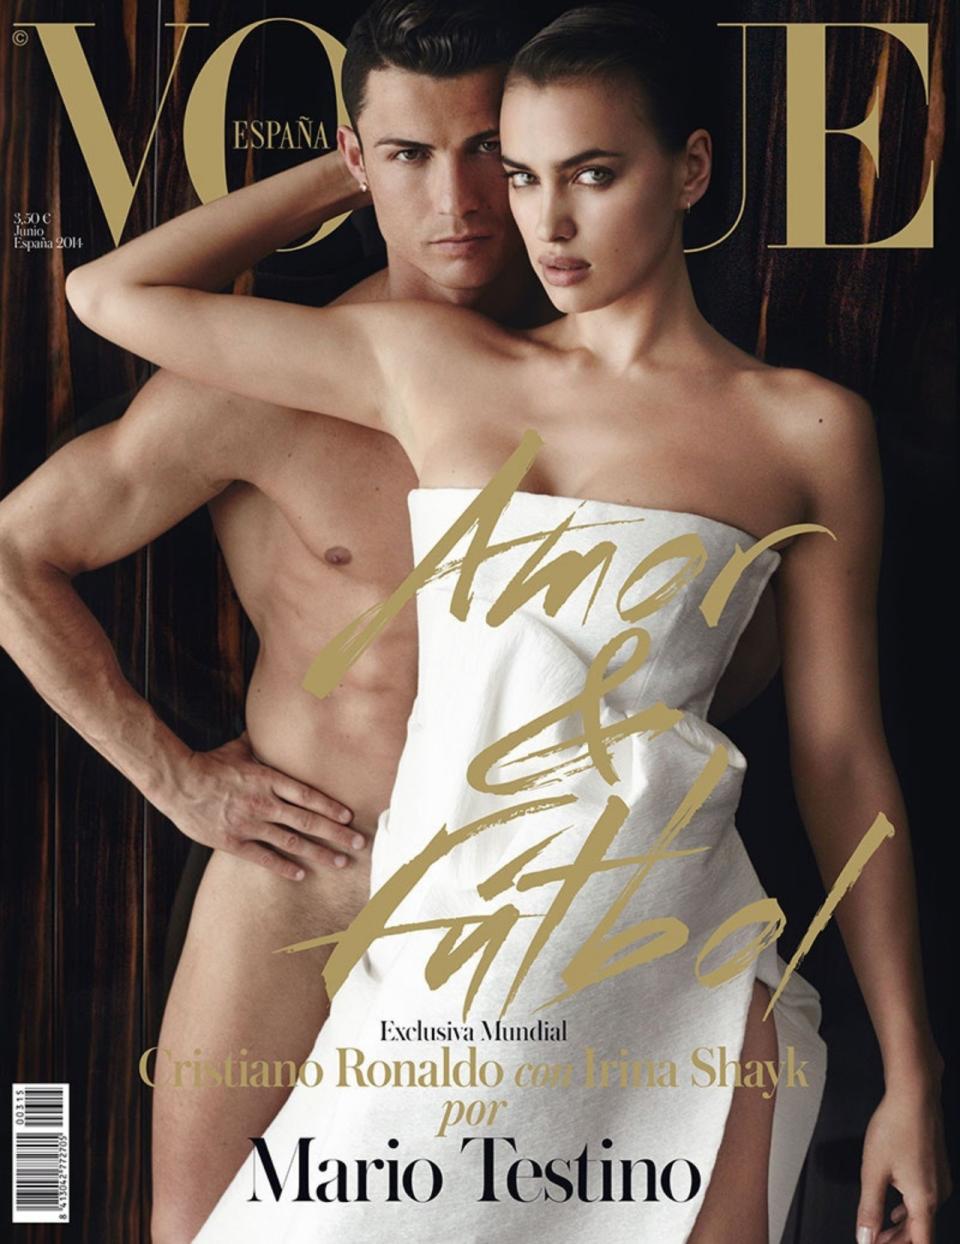 Cristiano Ronaldo posa desnudo con Irina Shayk para Vogue España. (Foto: Vogue).